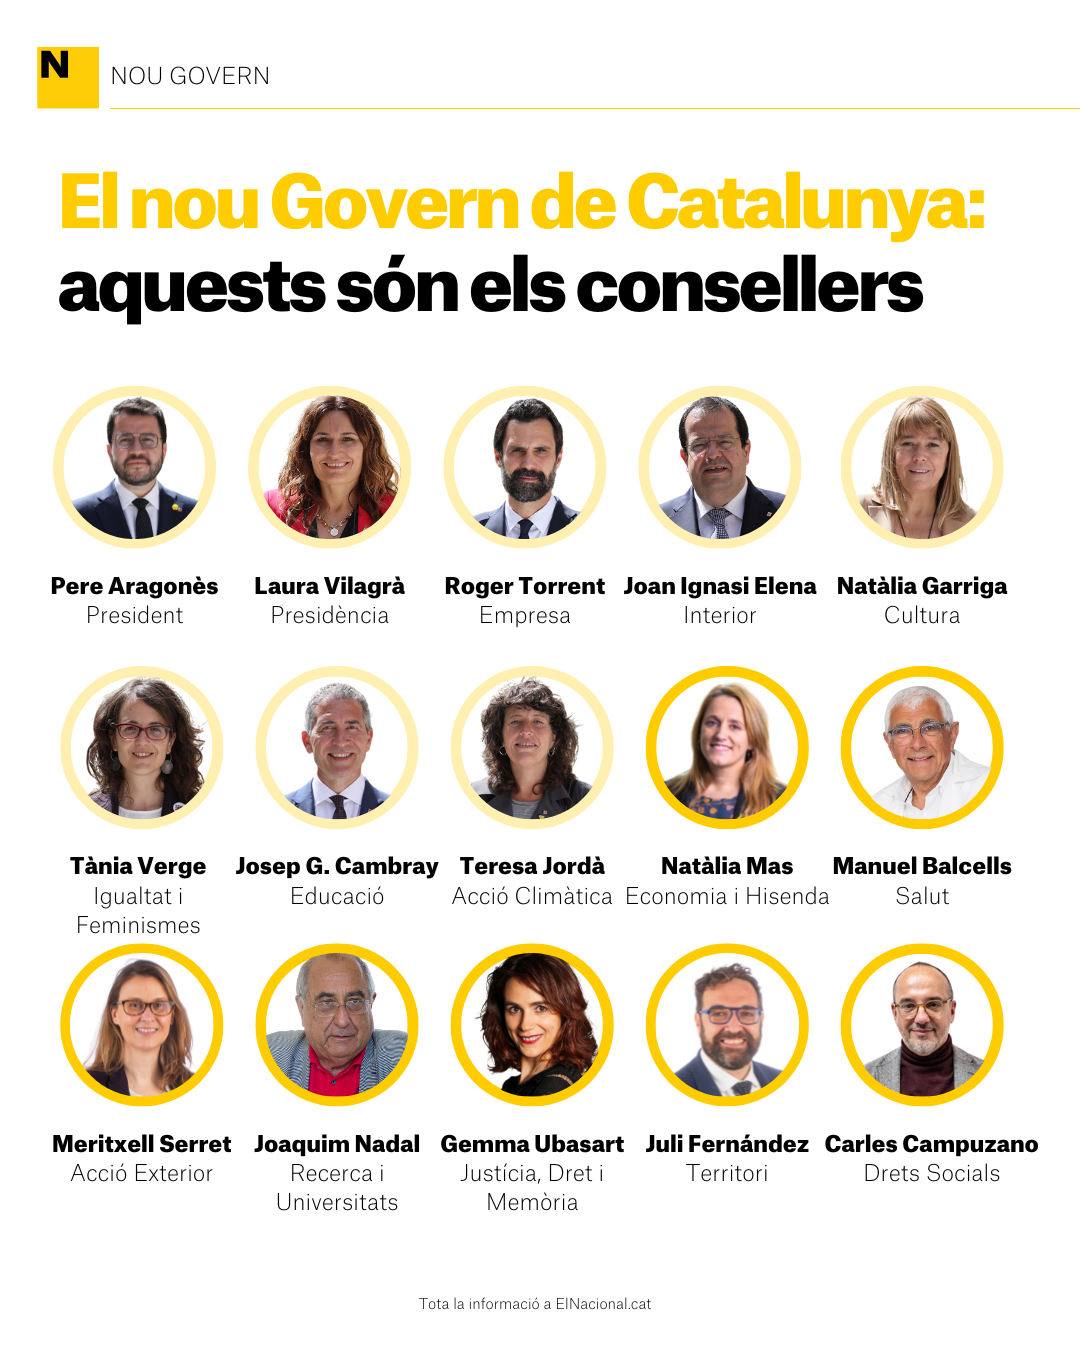 Nou govern Catalunya consellers grafic